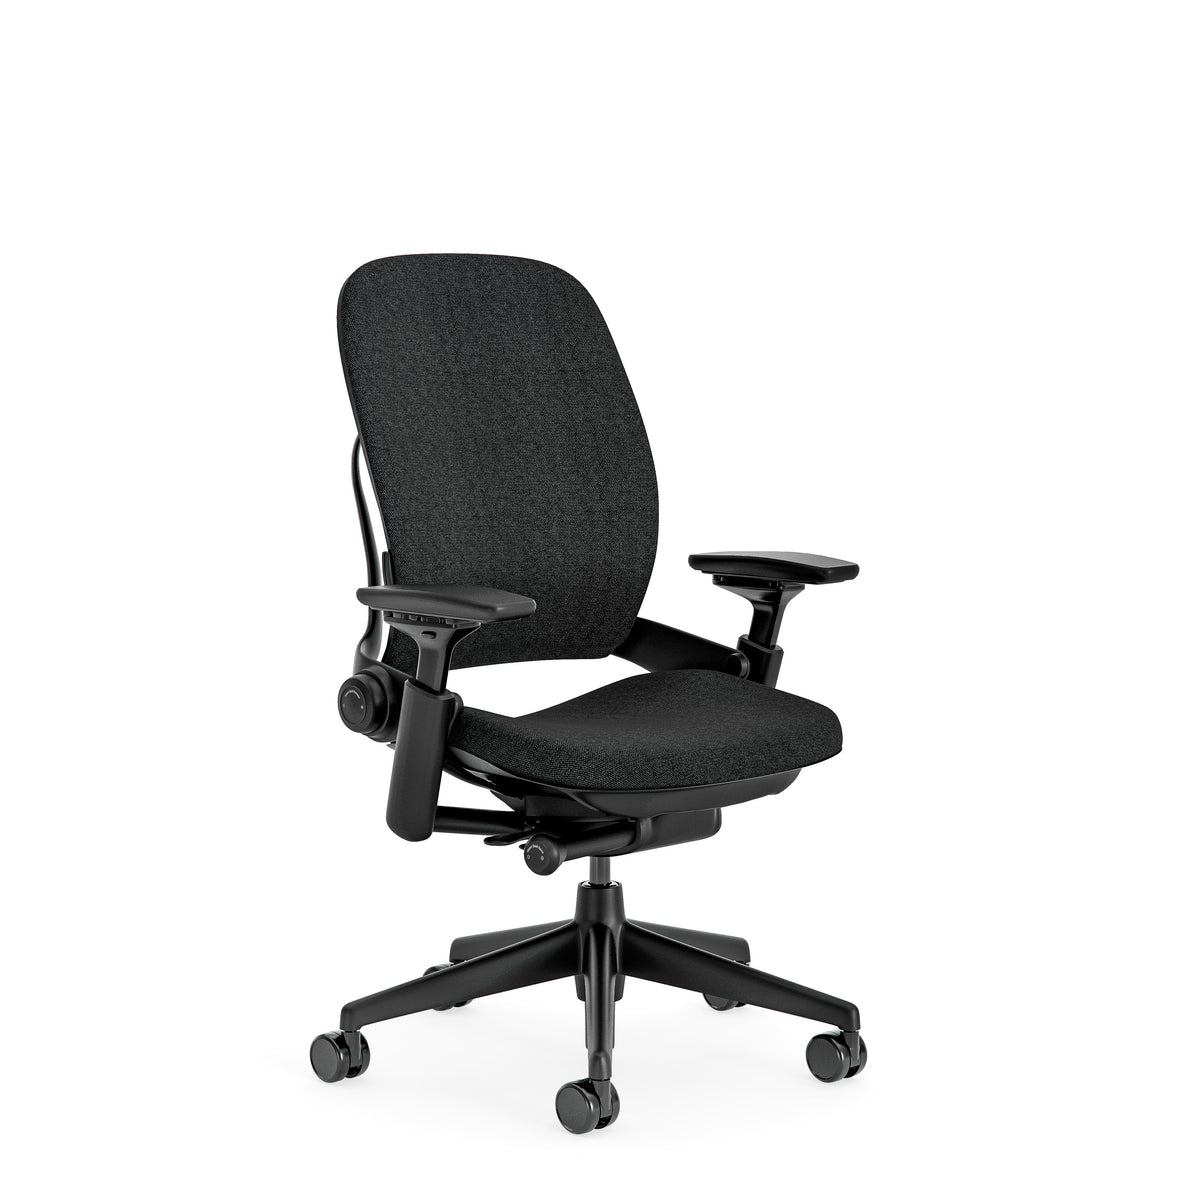 Leap – Ergonomic office chair